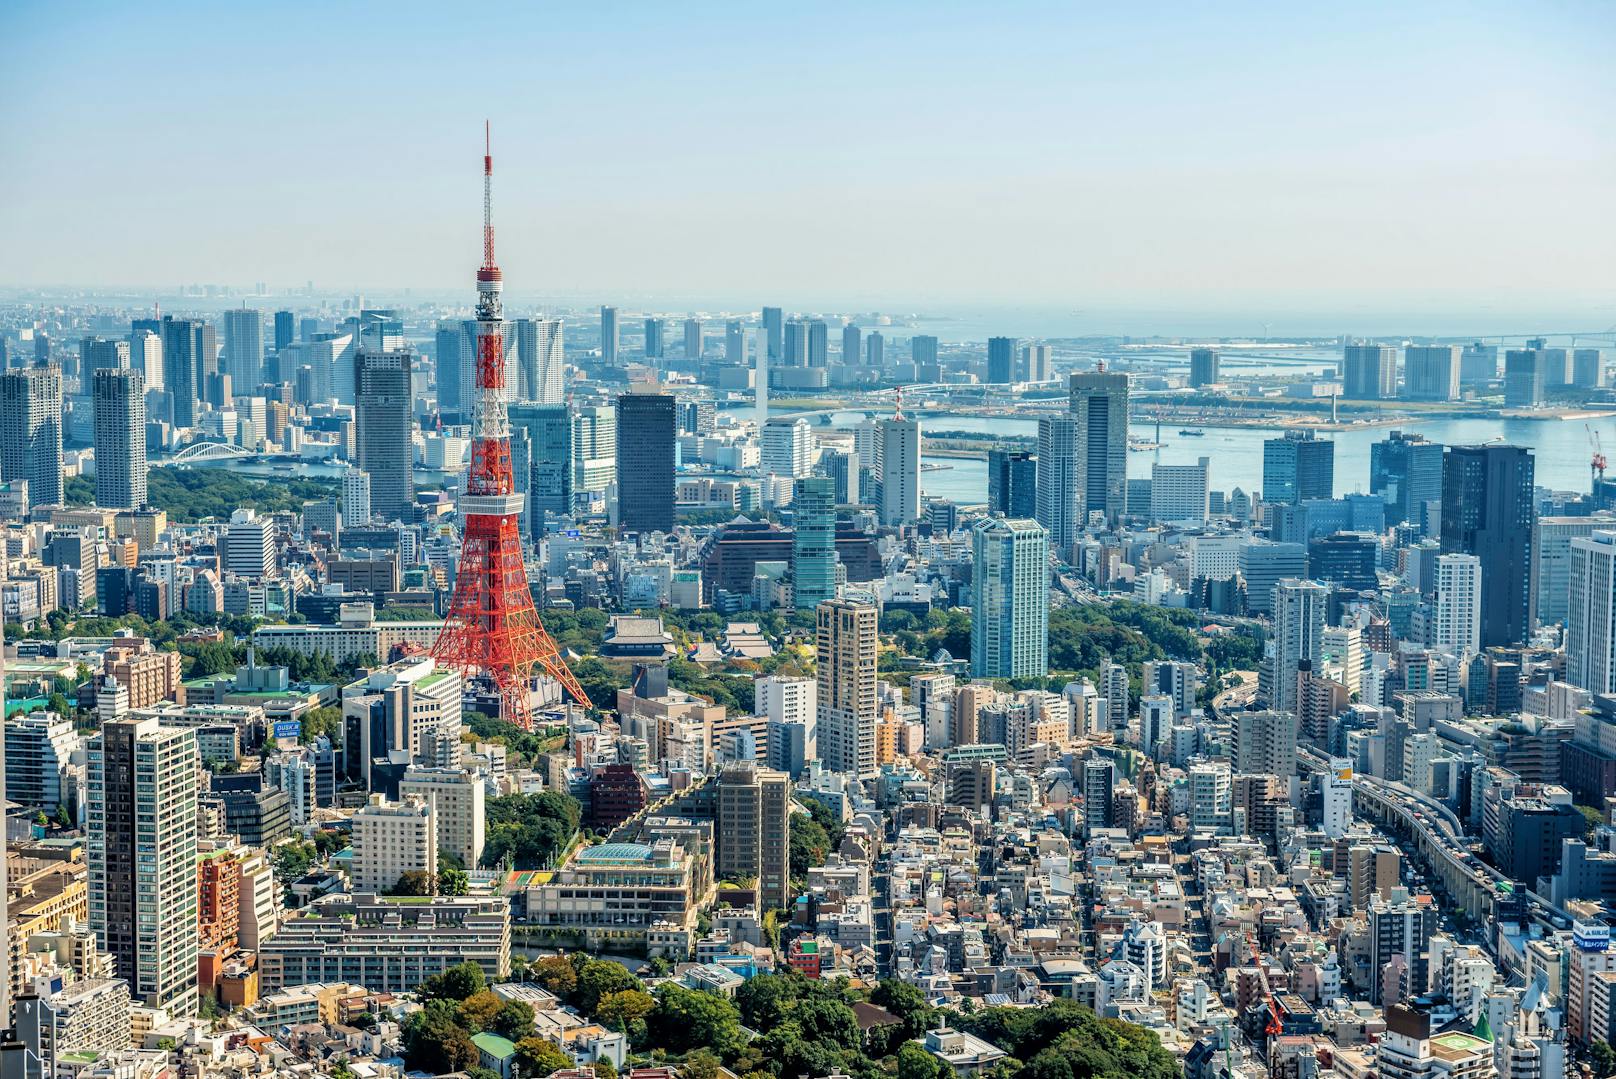 Erdbeben der Stärke 6,2 erschüttert den Großraum Tokio